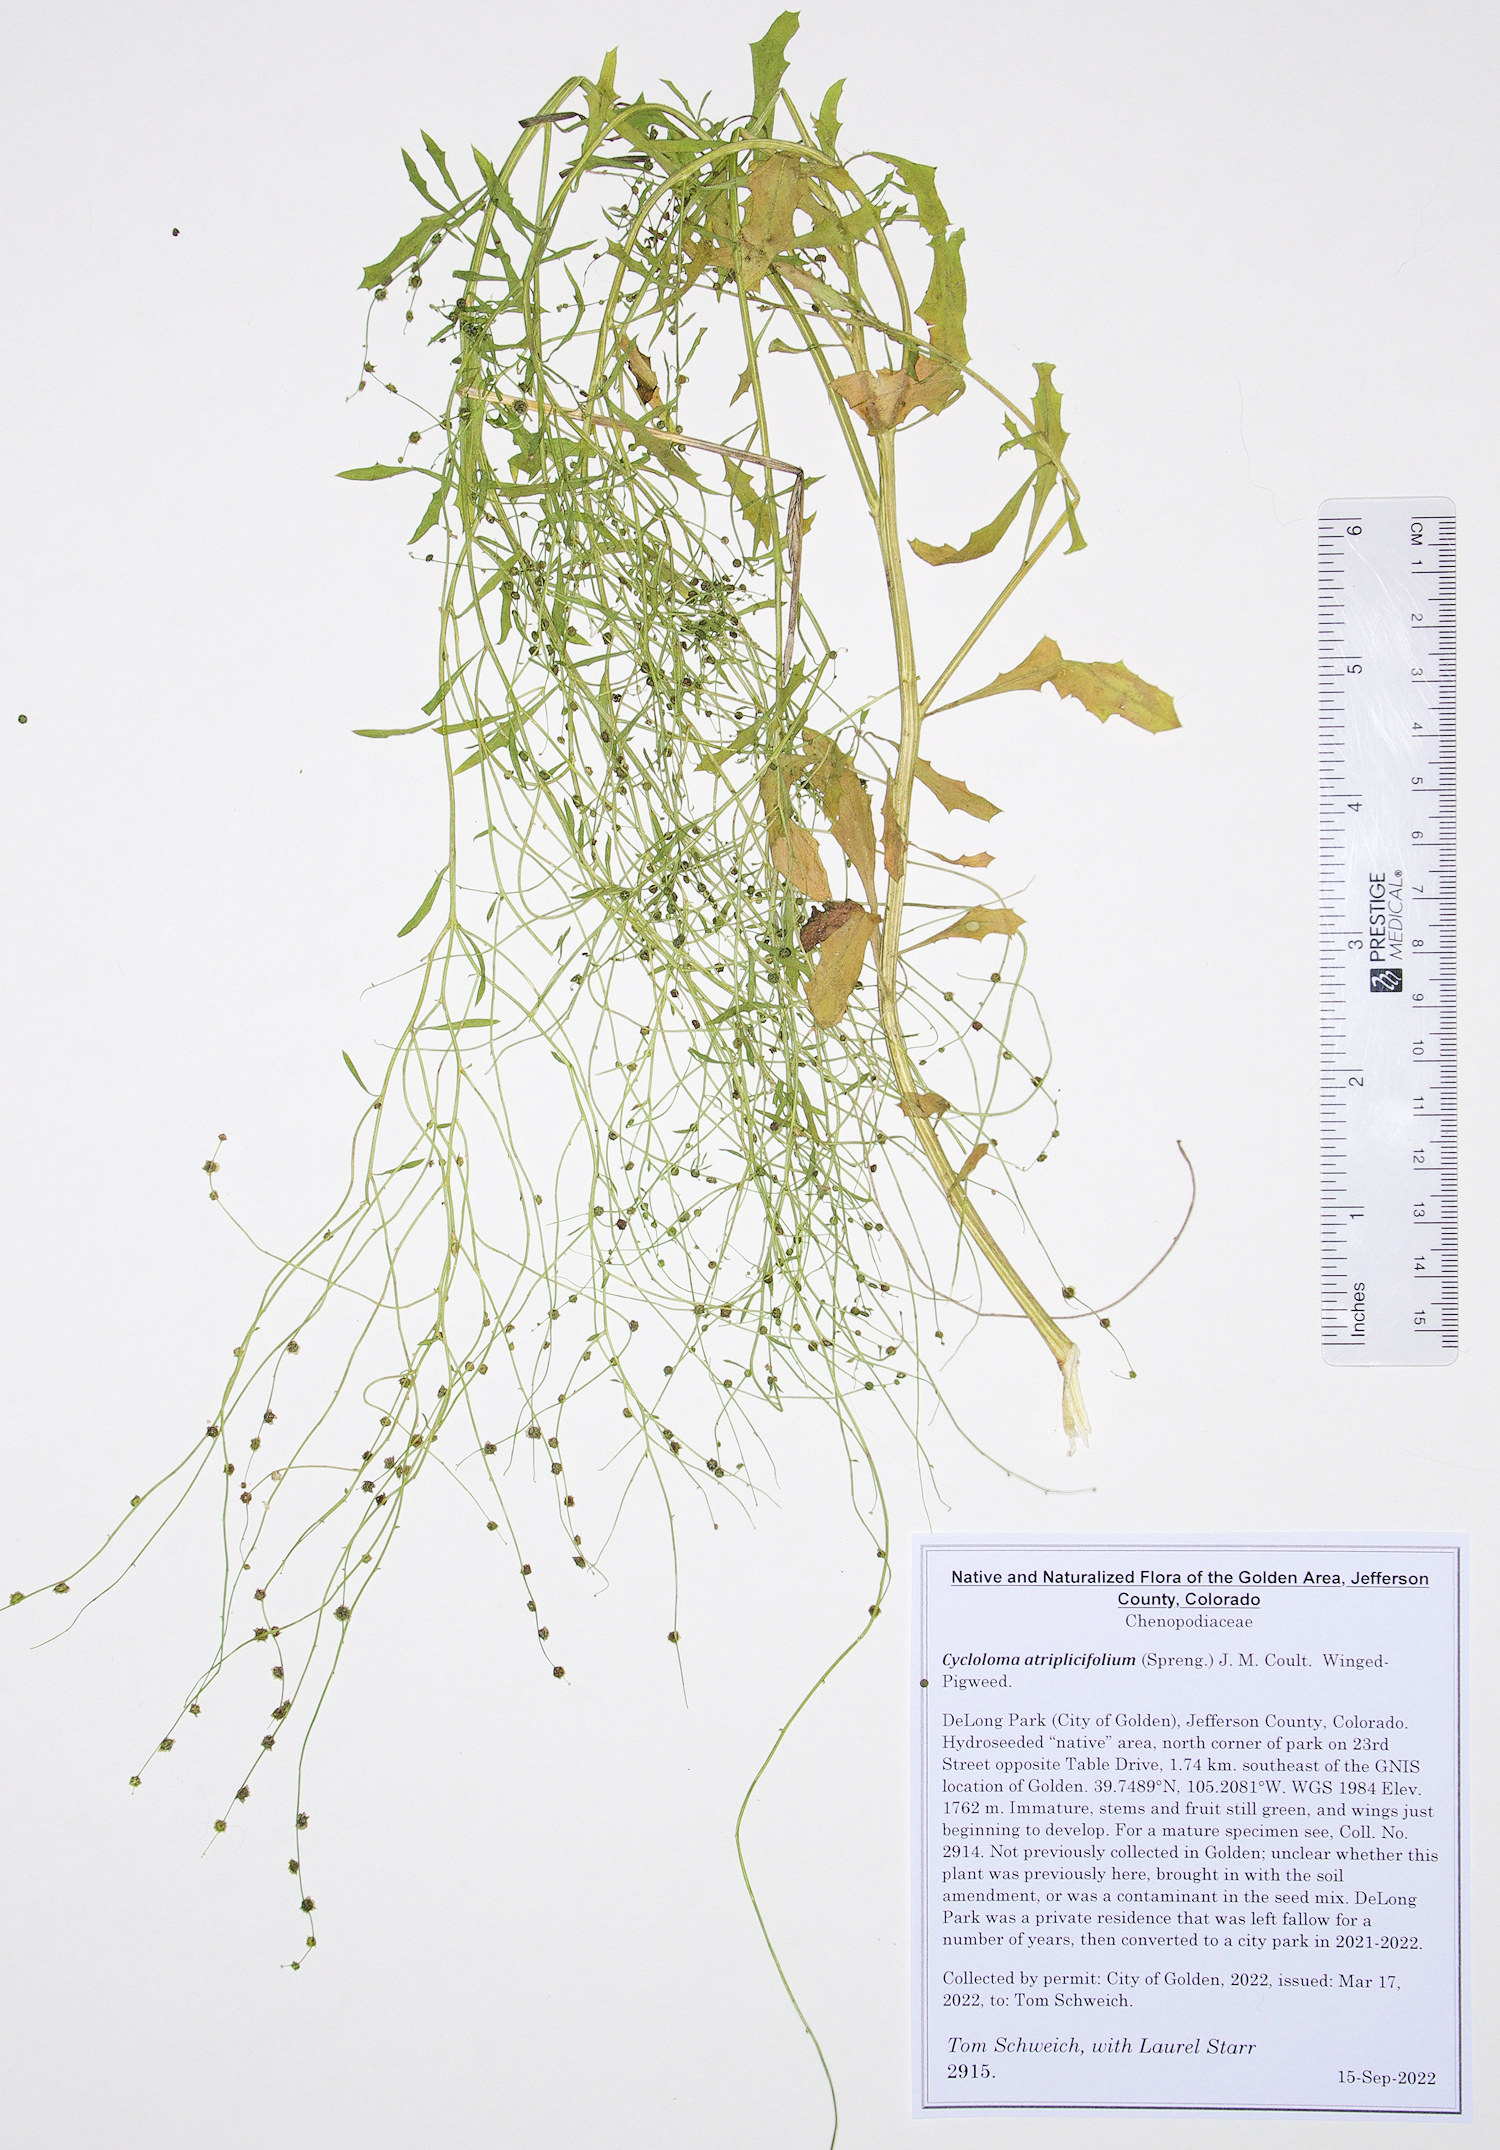 Chenopodiaceae Cycloloma atriplicifolium